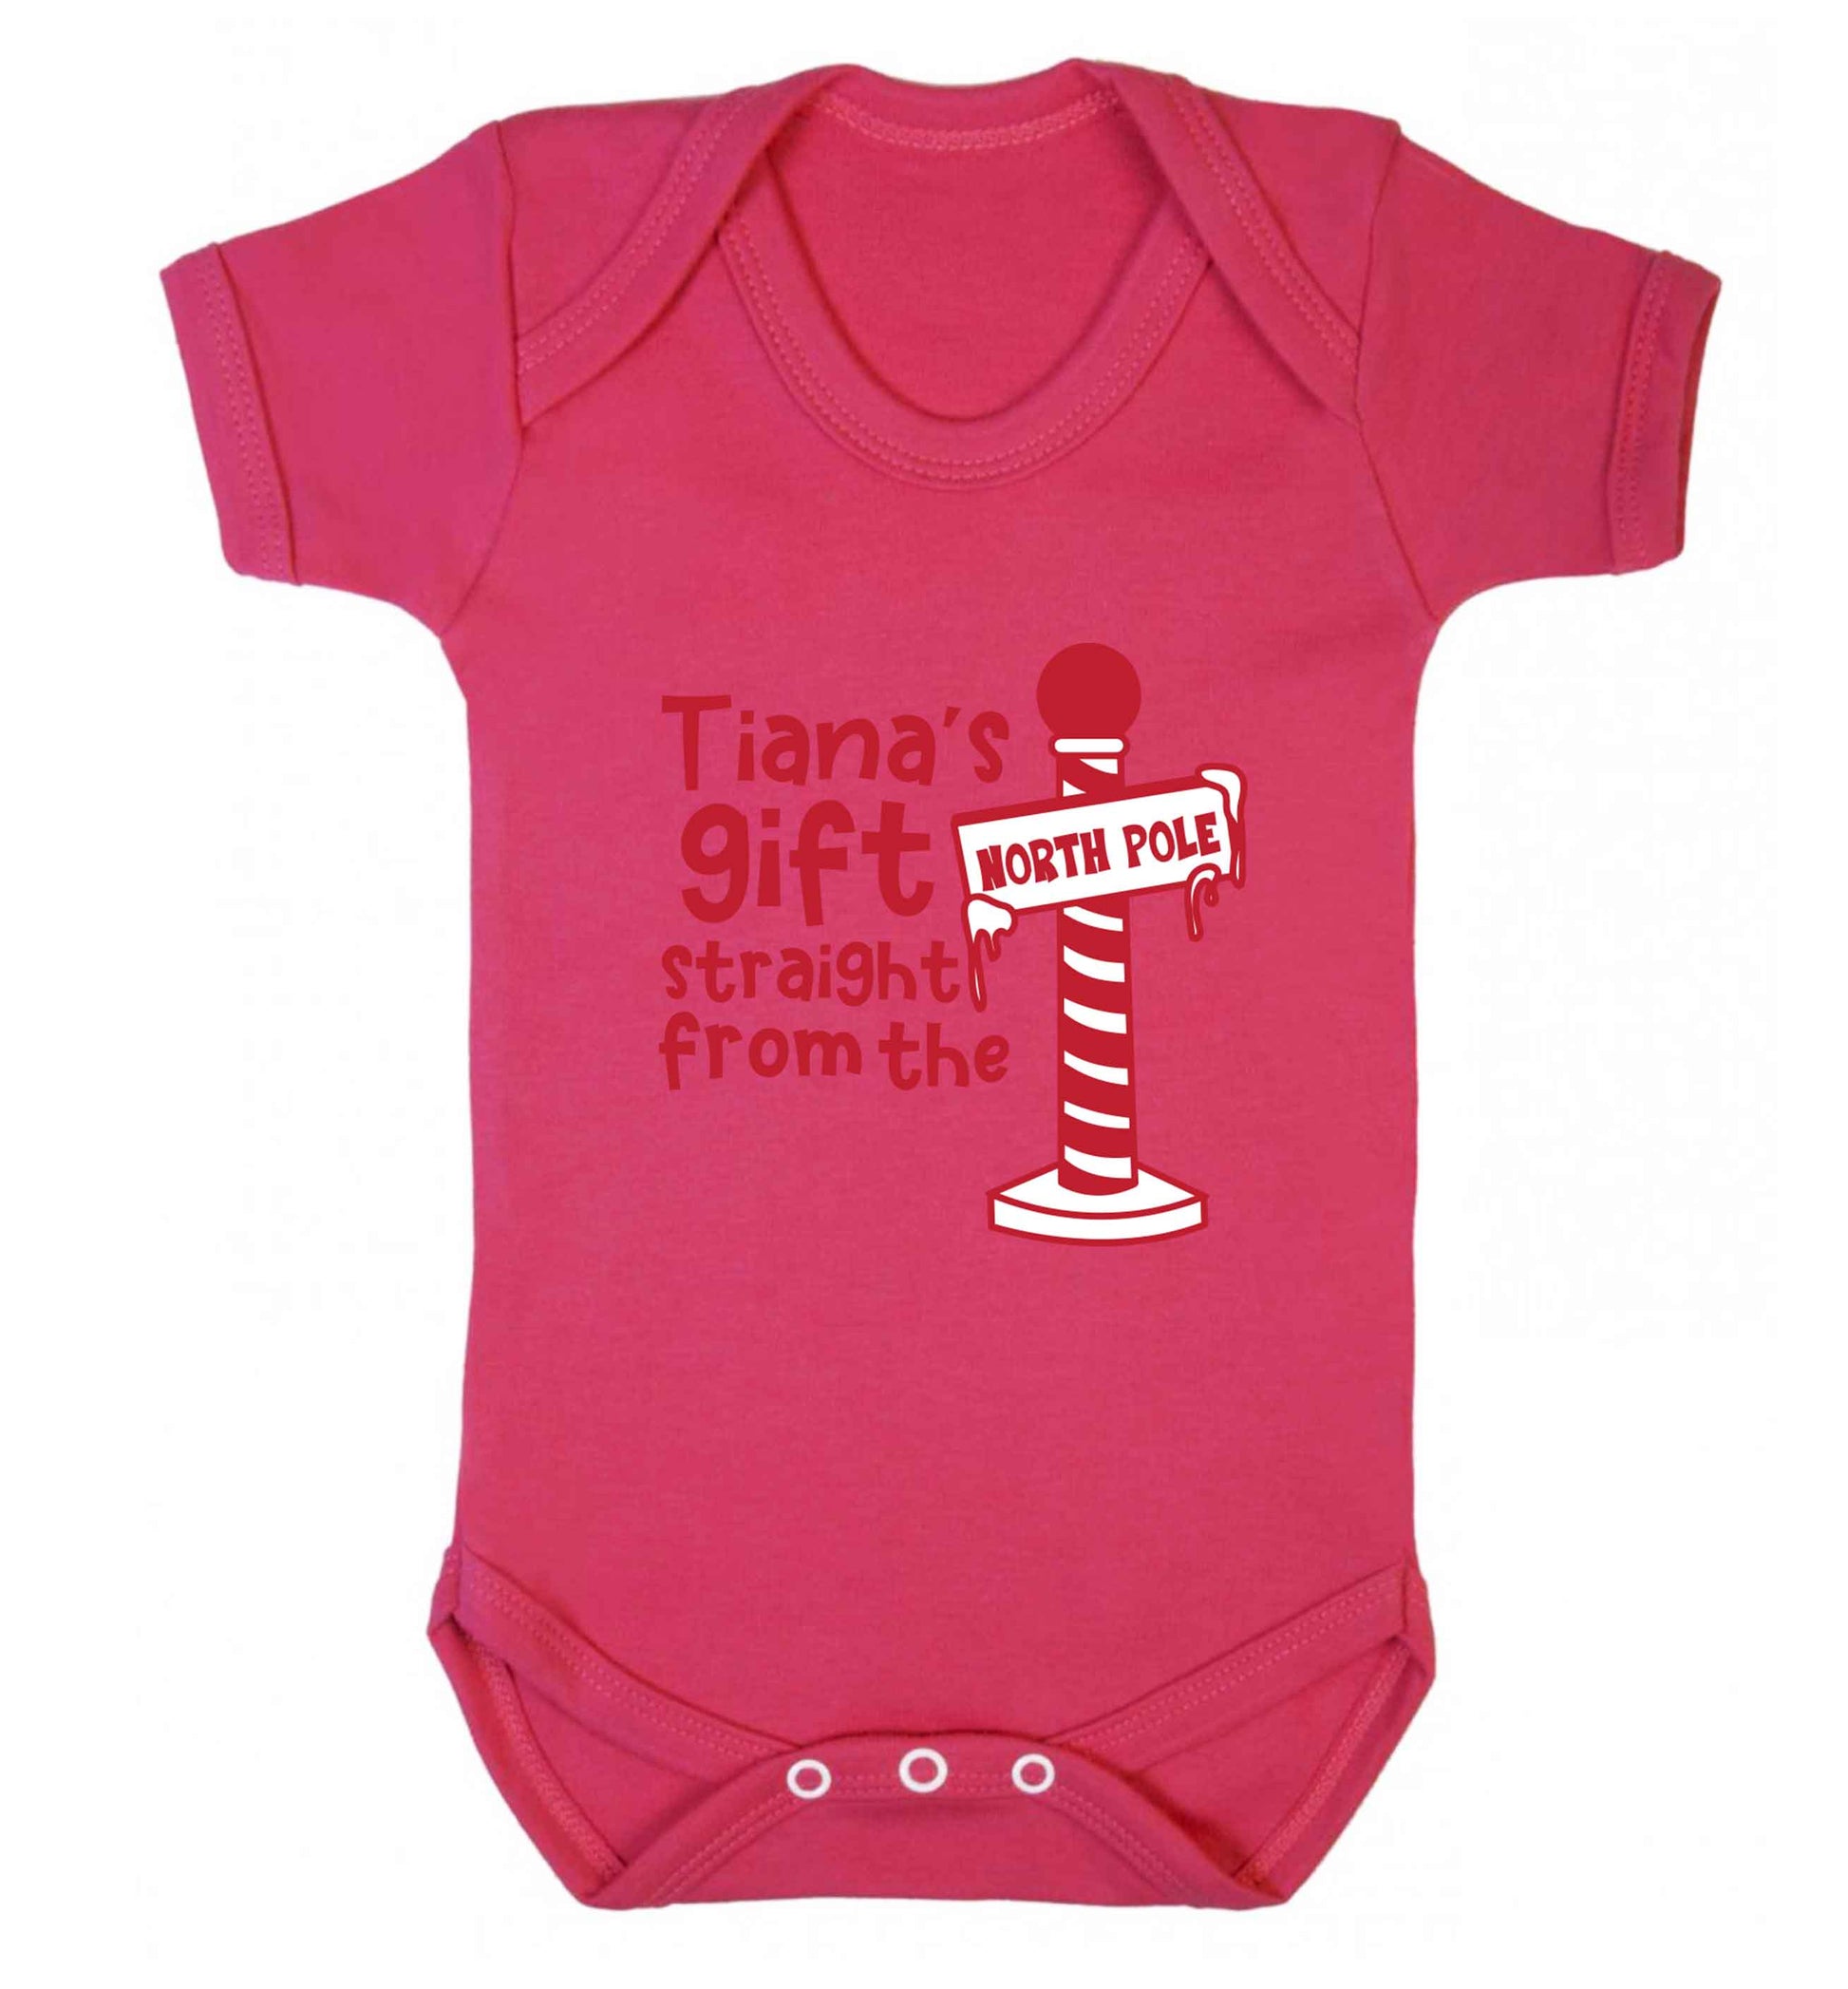 Merry Christmas baby vest dark pink 18-24 months